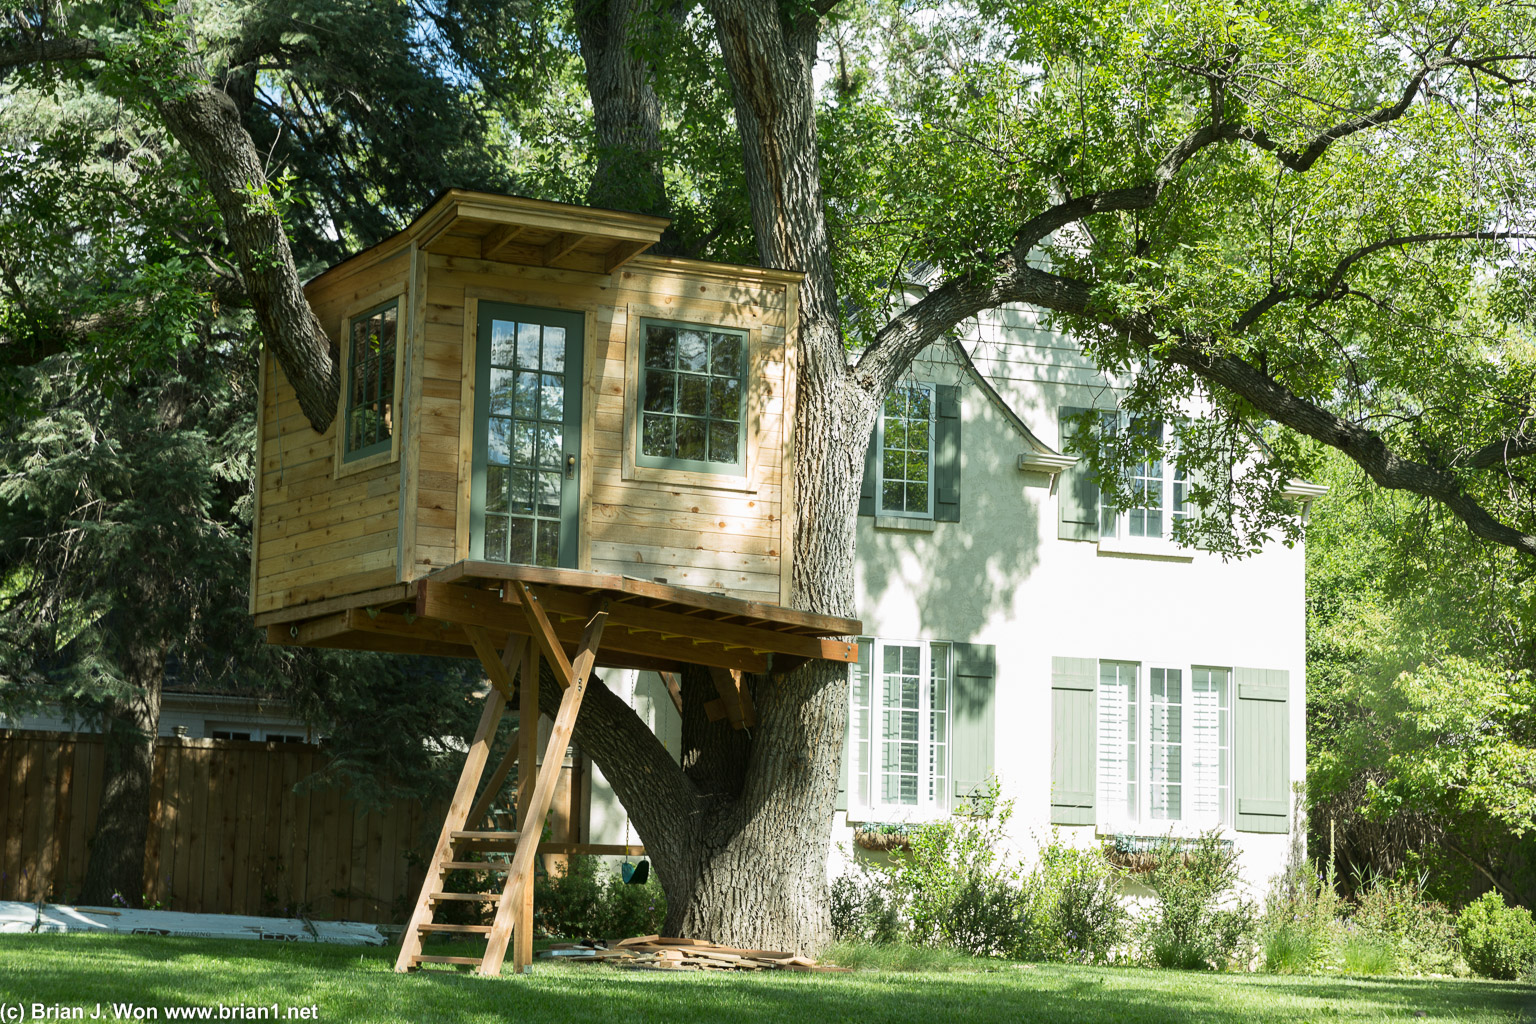 Awesome treehouse!